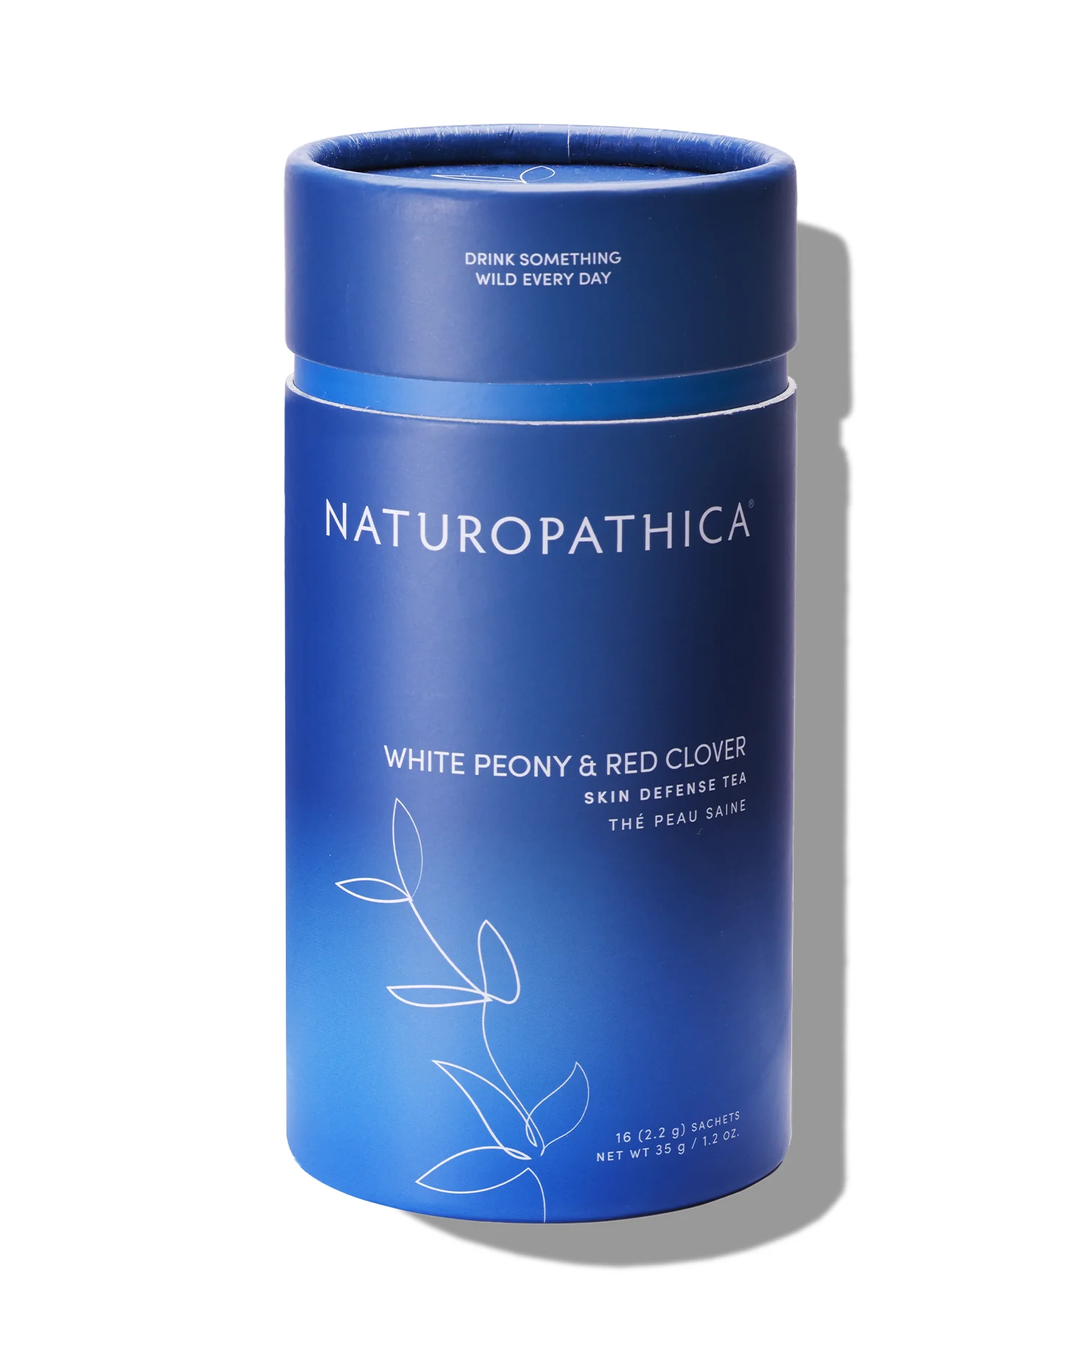 Naturopathica White Peony & Red Clover Skin Defense Tea